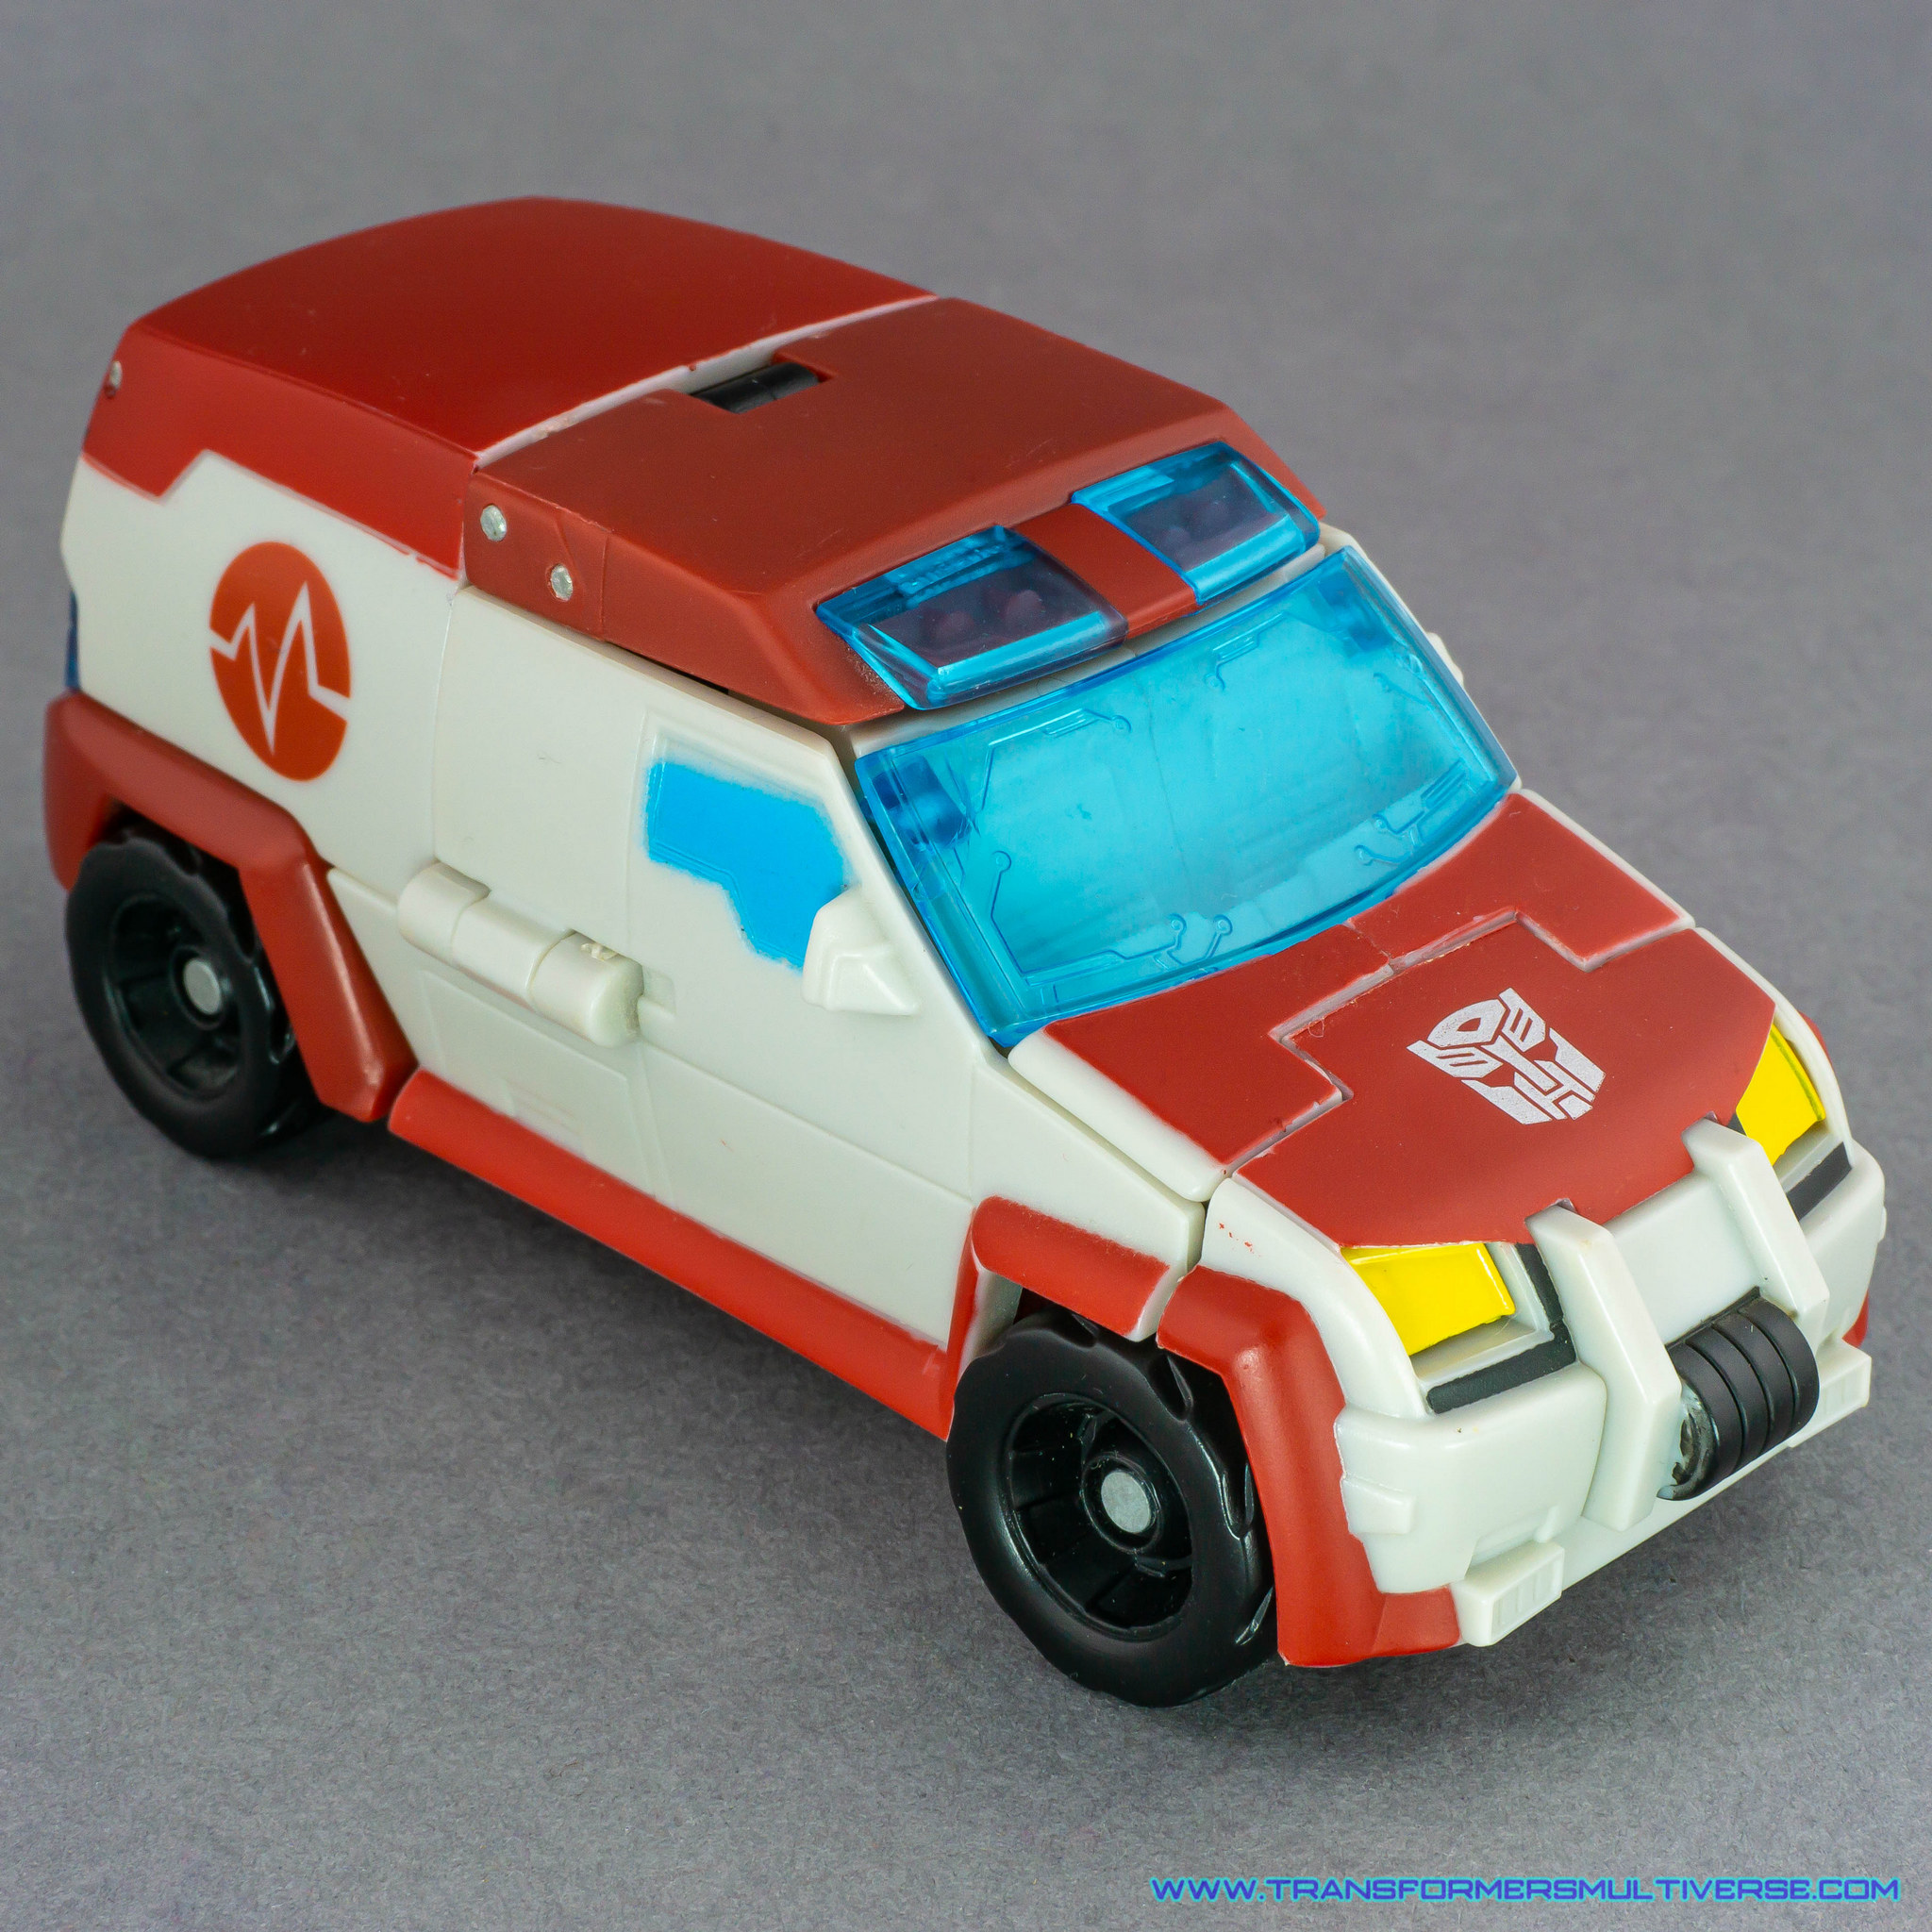 Transformers Animated Ratchet Ambulance mode, alternate angle